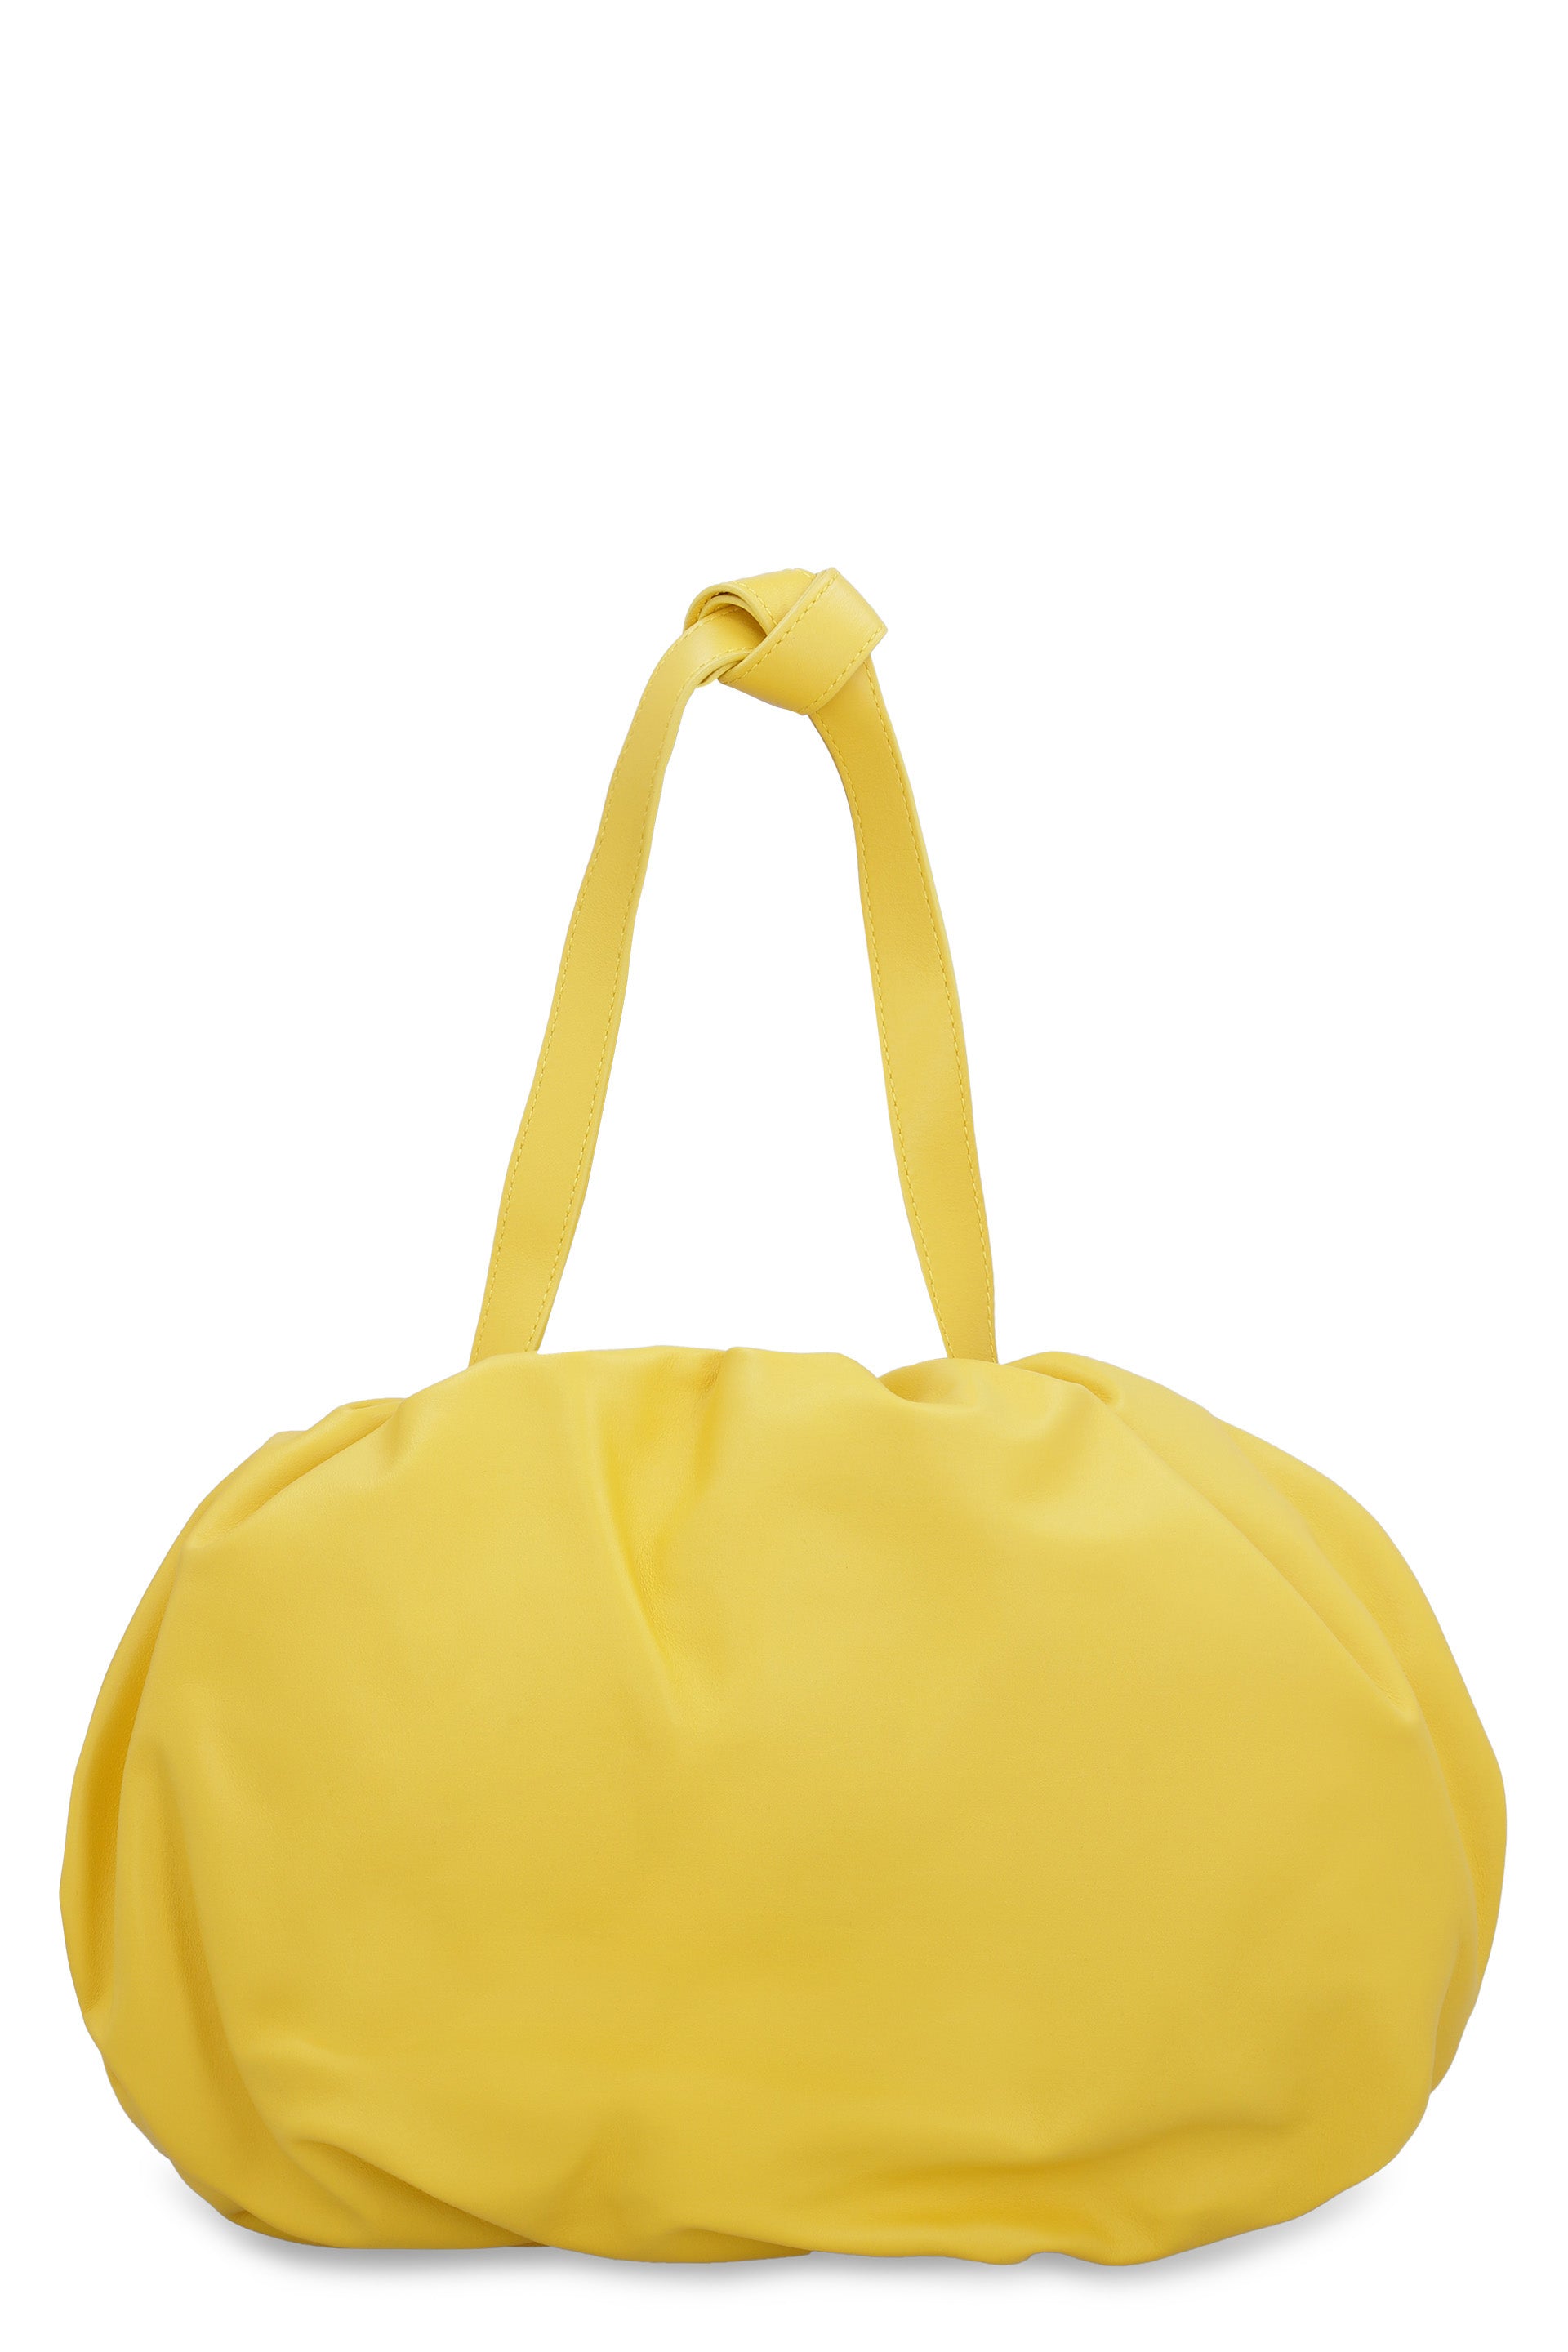 Bottega Veneta Luxurious Leather Handbag For Sophisticated Women In Yellow